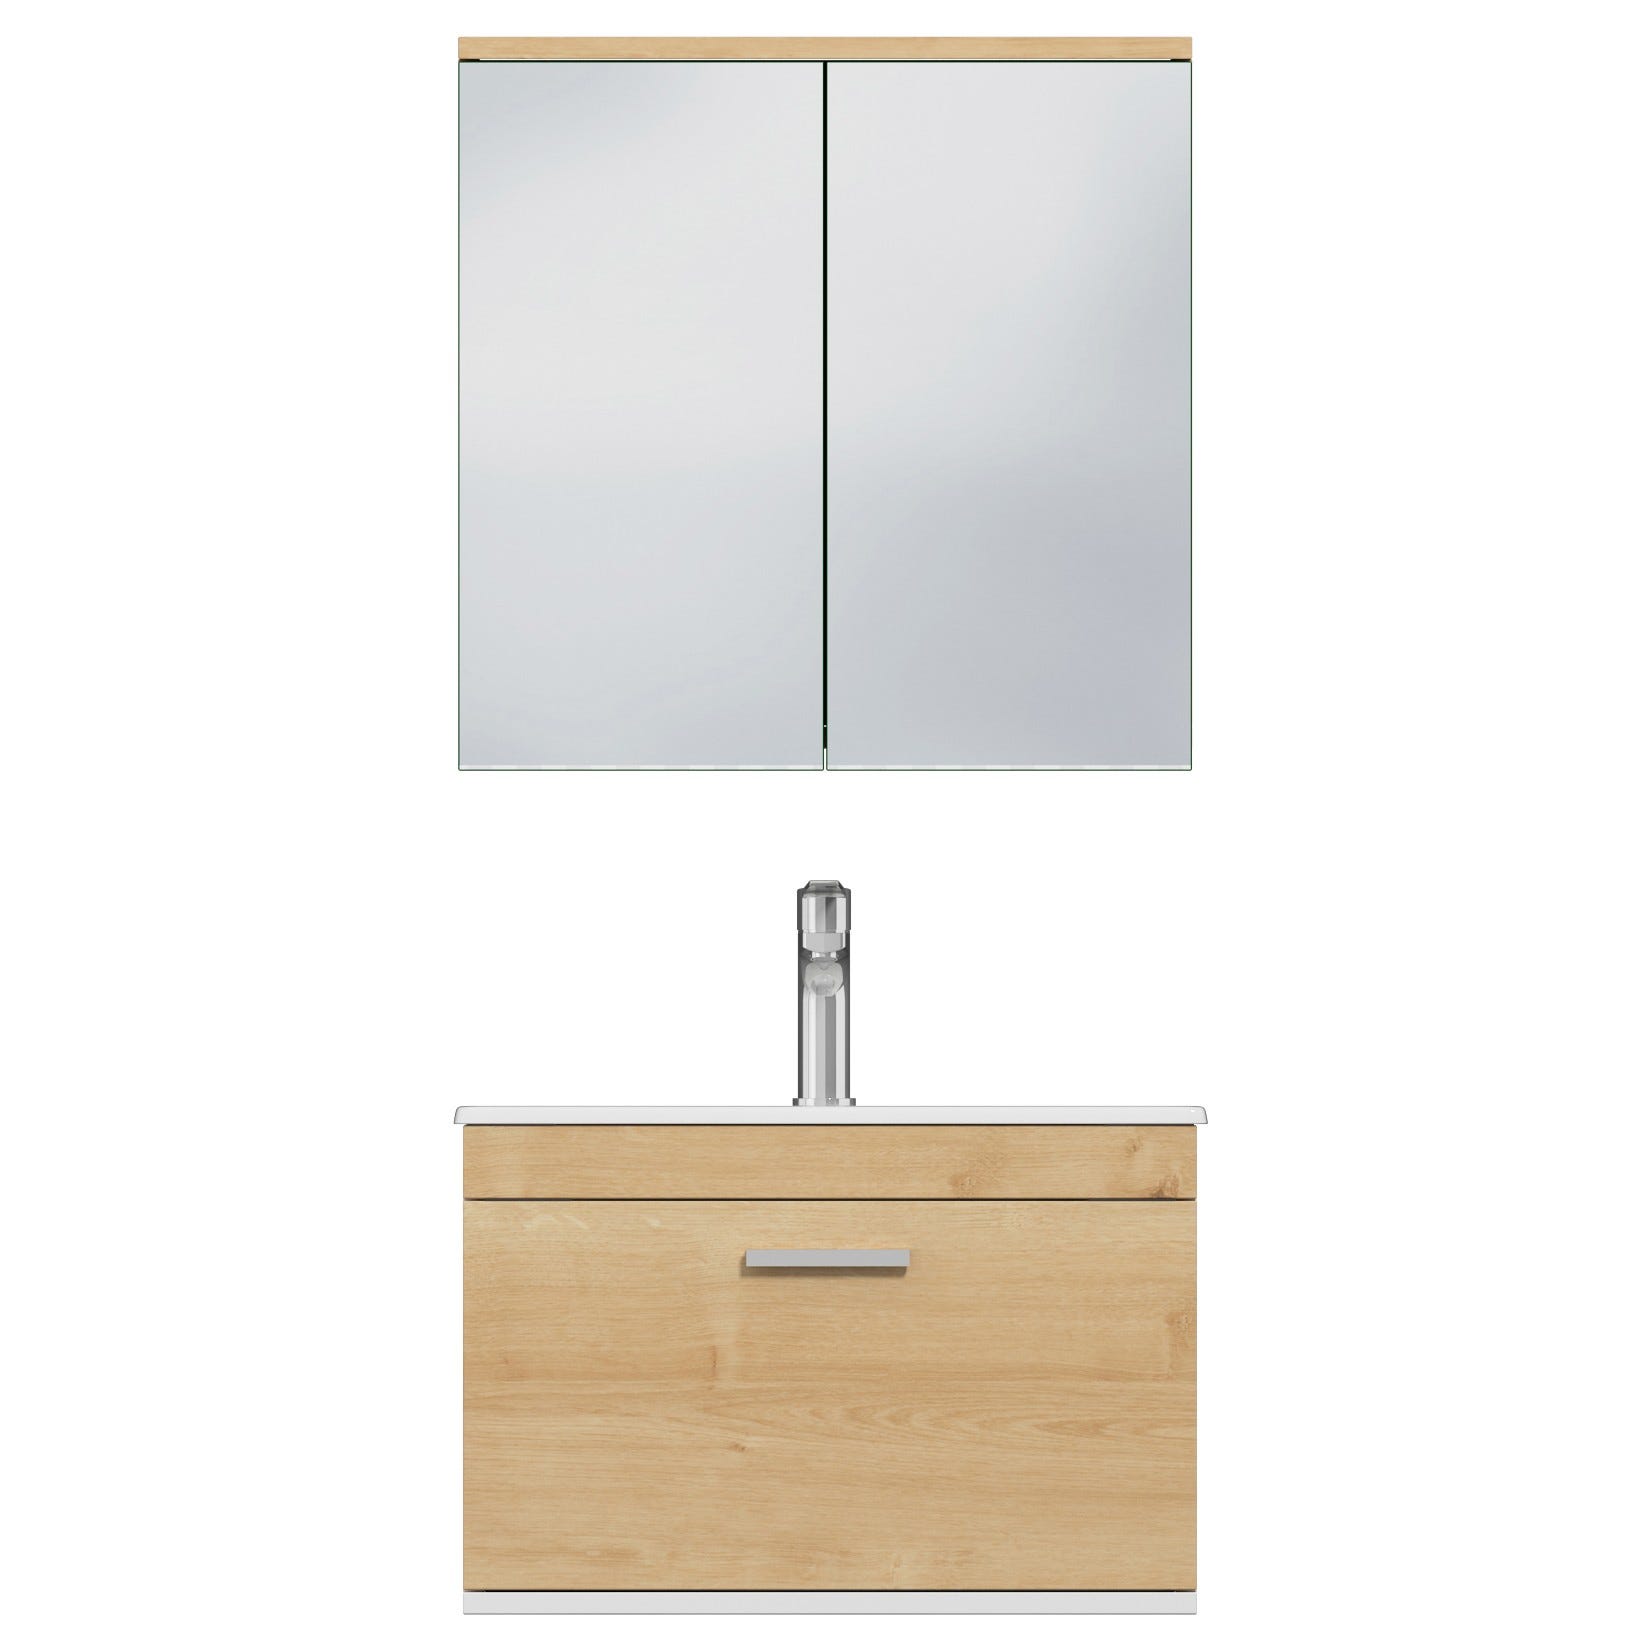 RUBITE Meuble salle de bain simple vasque 1 tiroir chêne clair largeur 60 cm + miroir armoire 4